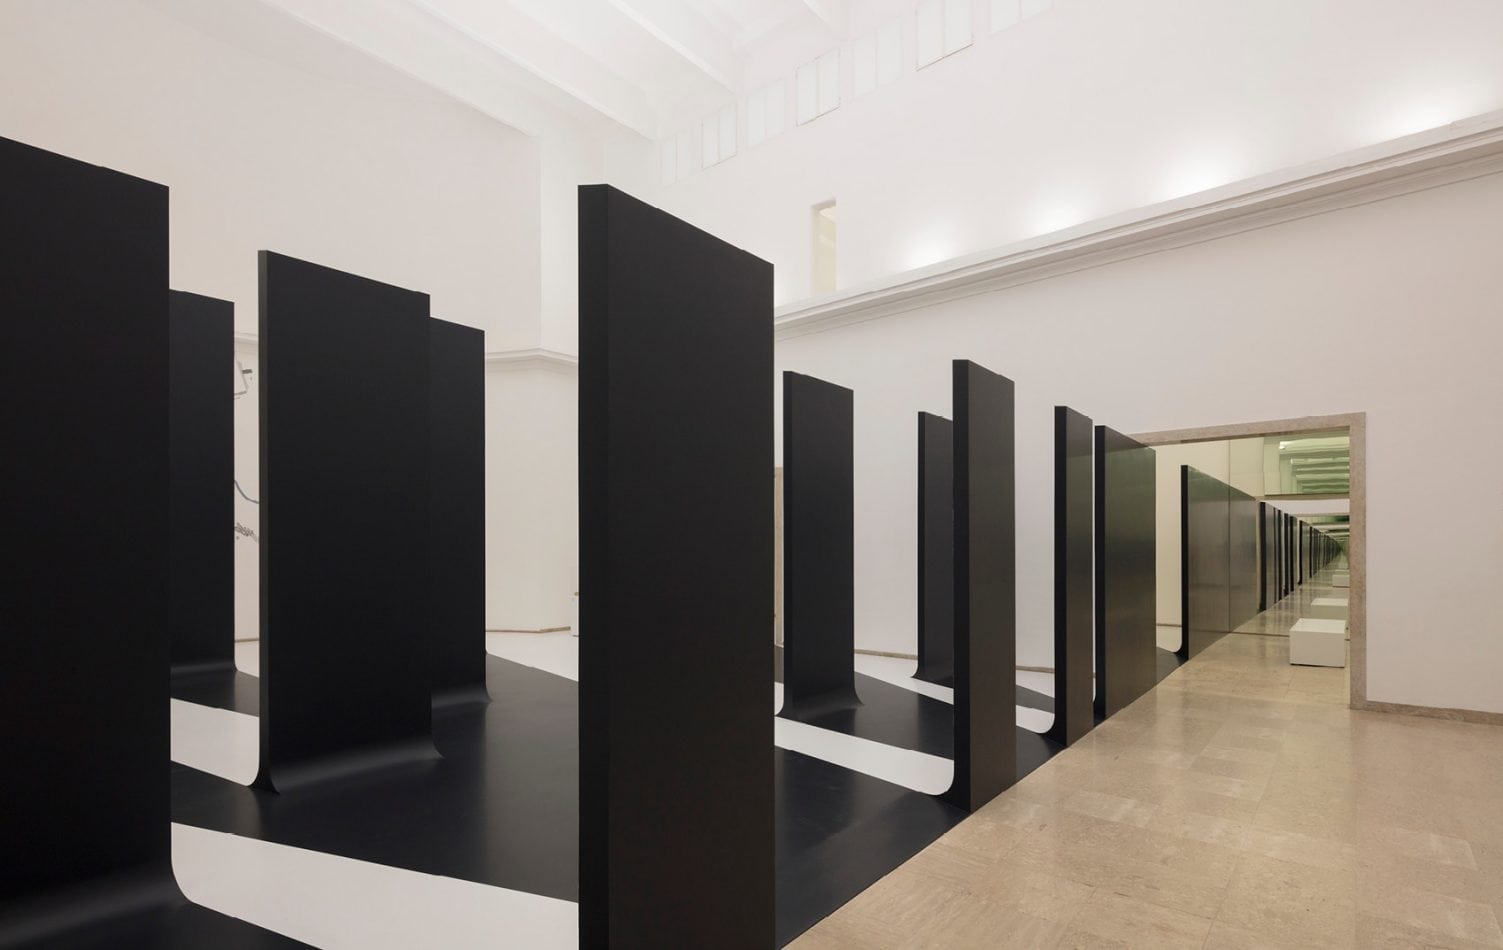 Christoph Korner on Unbuilding Walls at the Venice Biennale